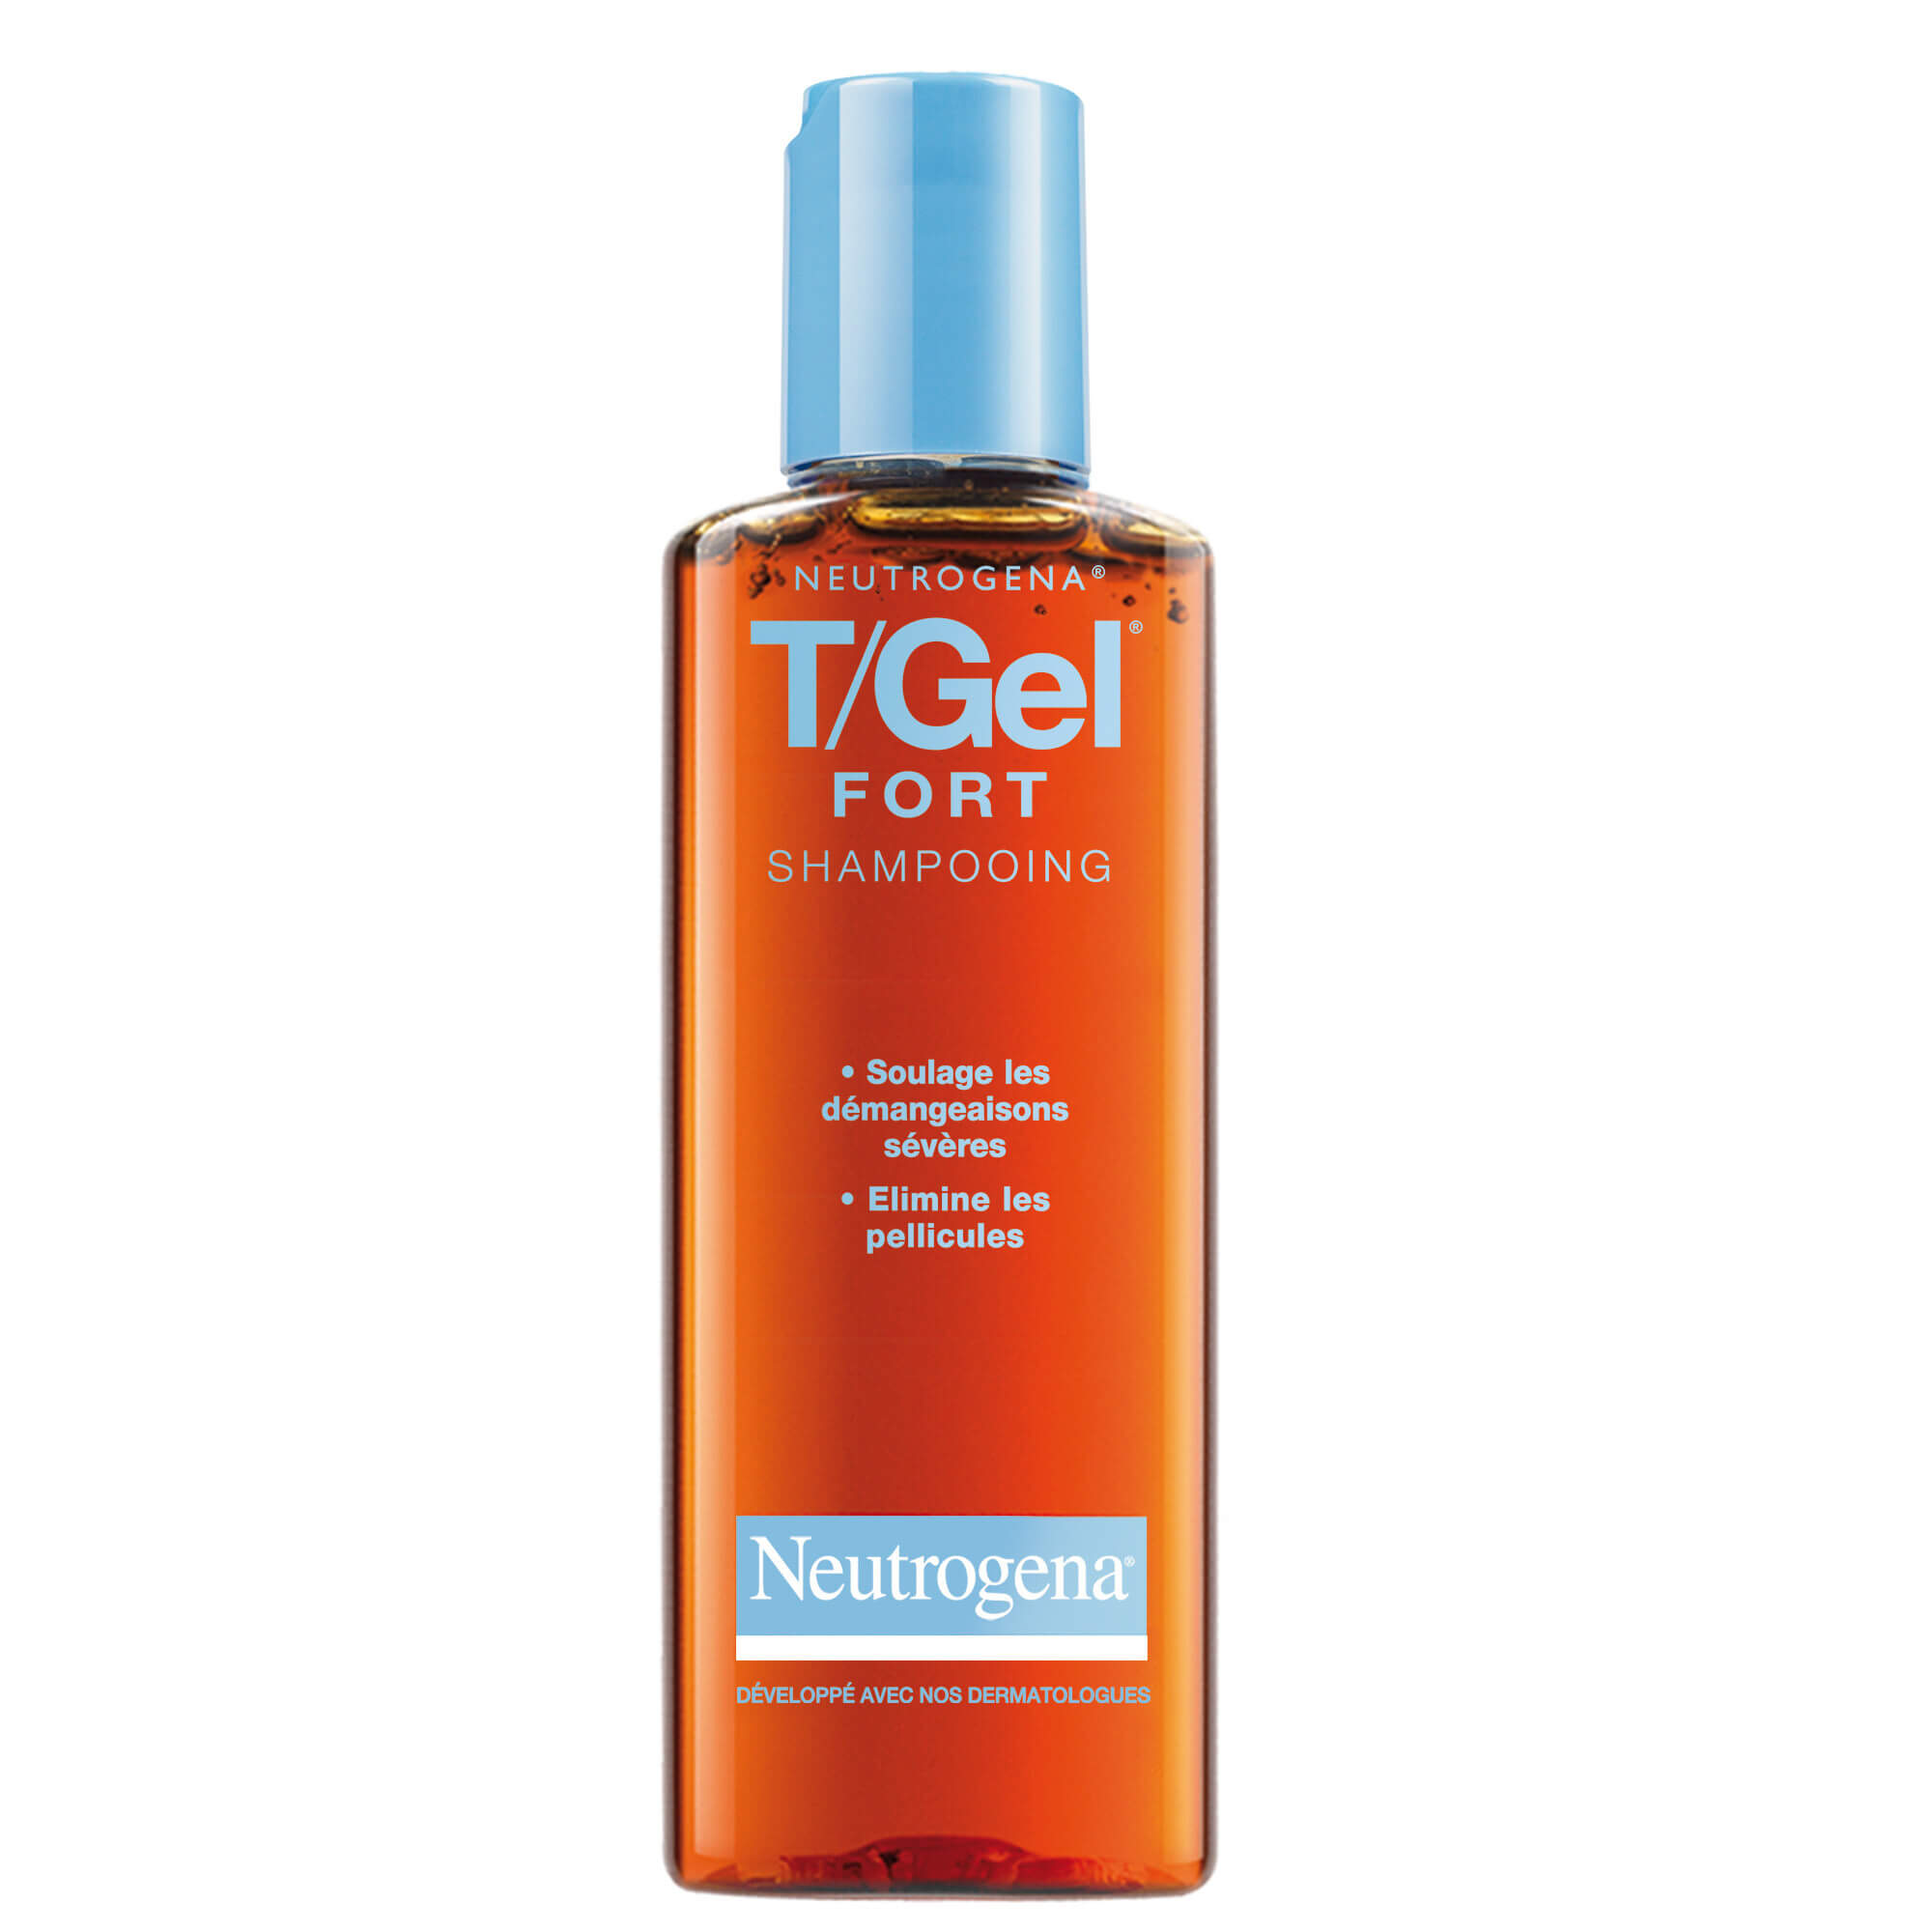 Neutrogena Šampon proti lupům T/Gel Forte (Shampooing) 150 ml